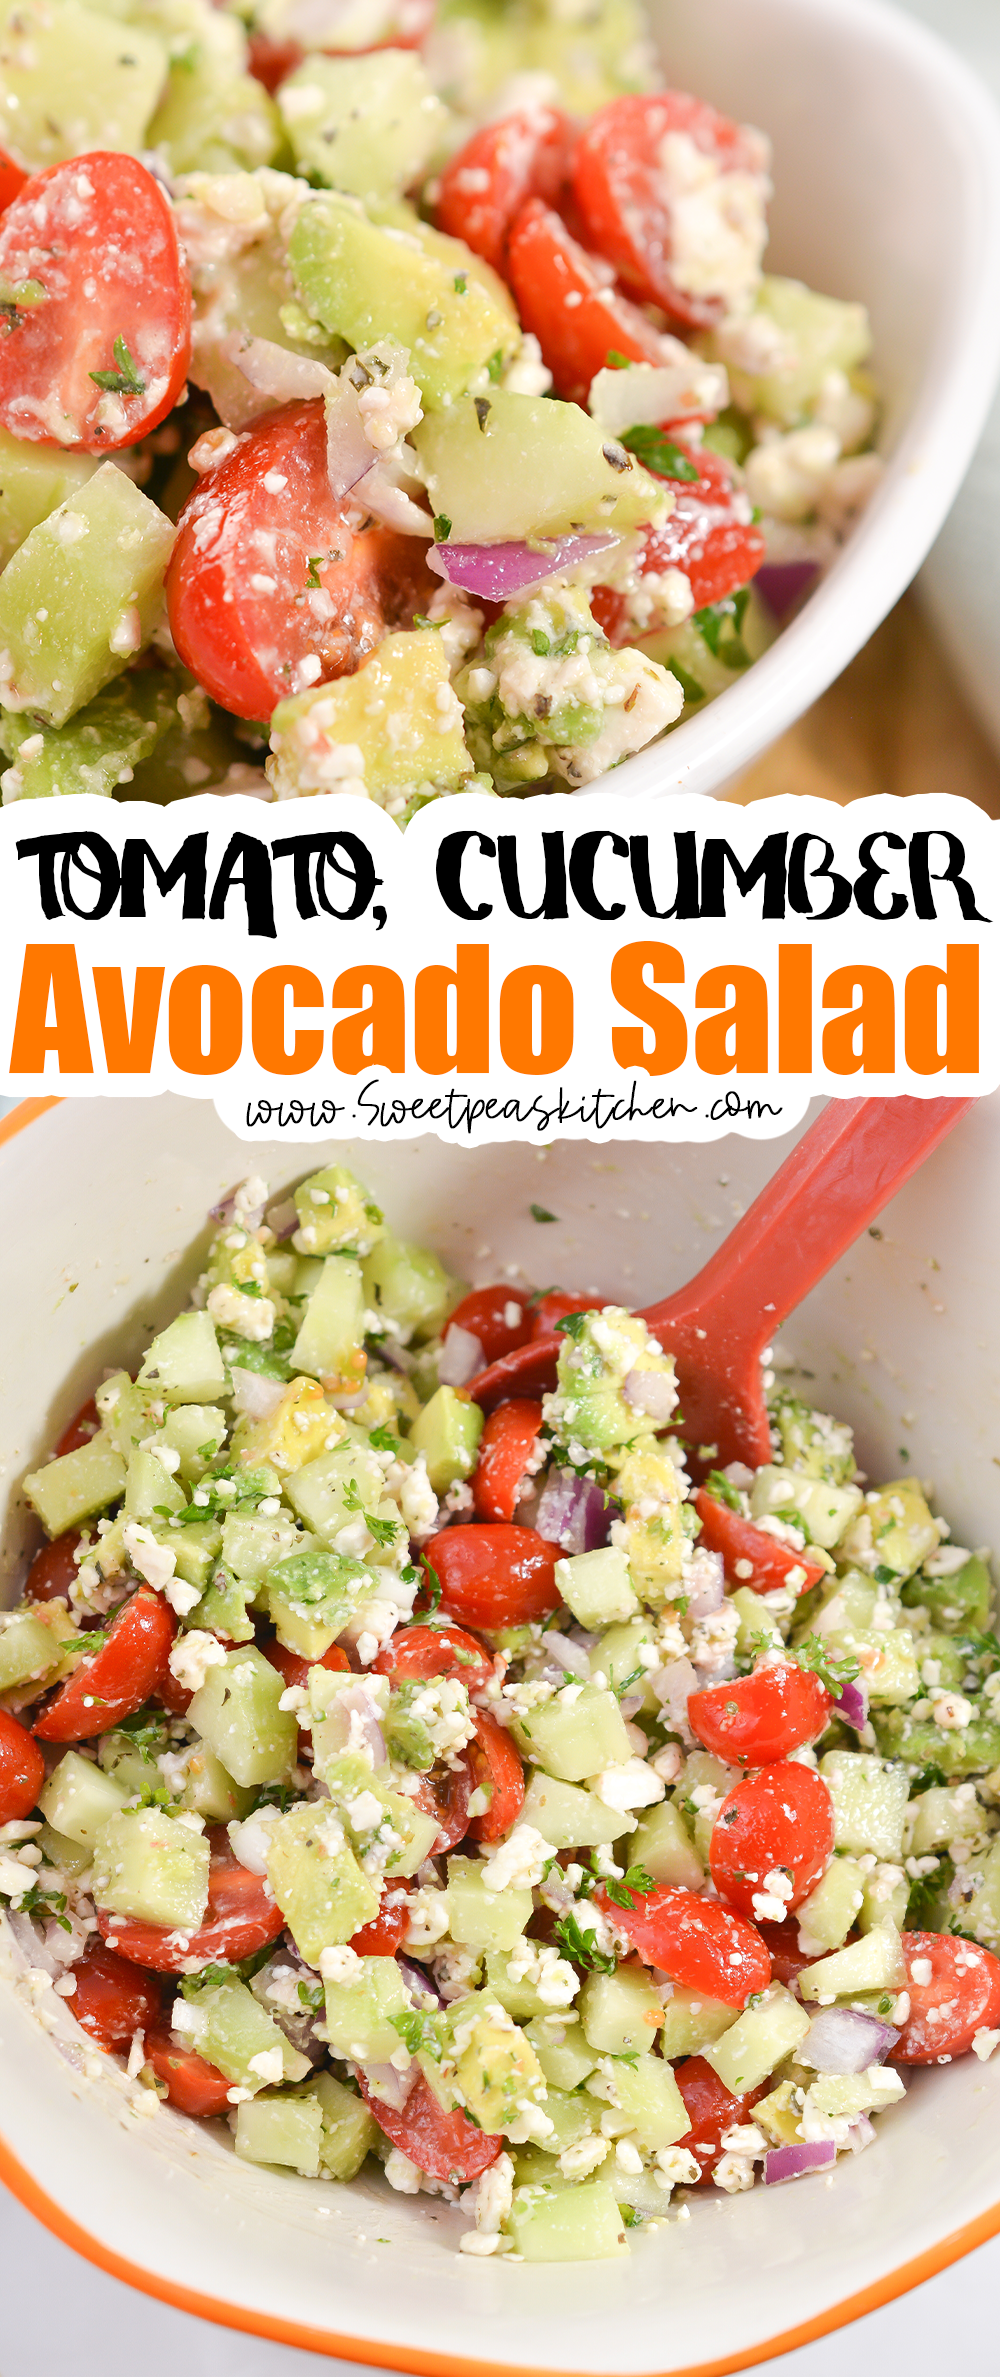 Tomato, Cucumber and Avocado Salad